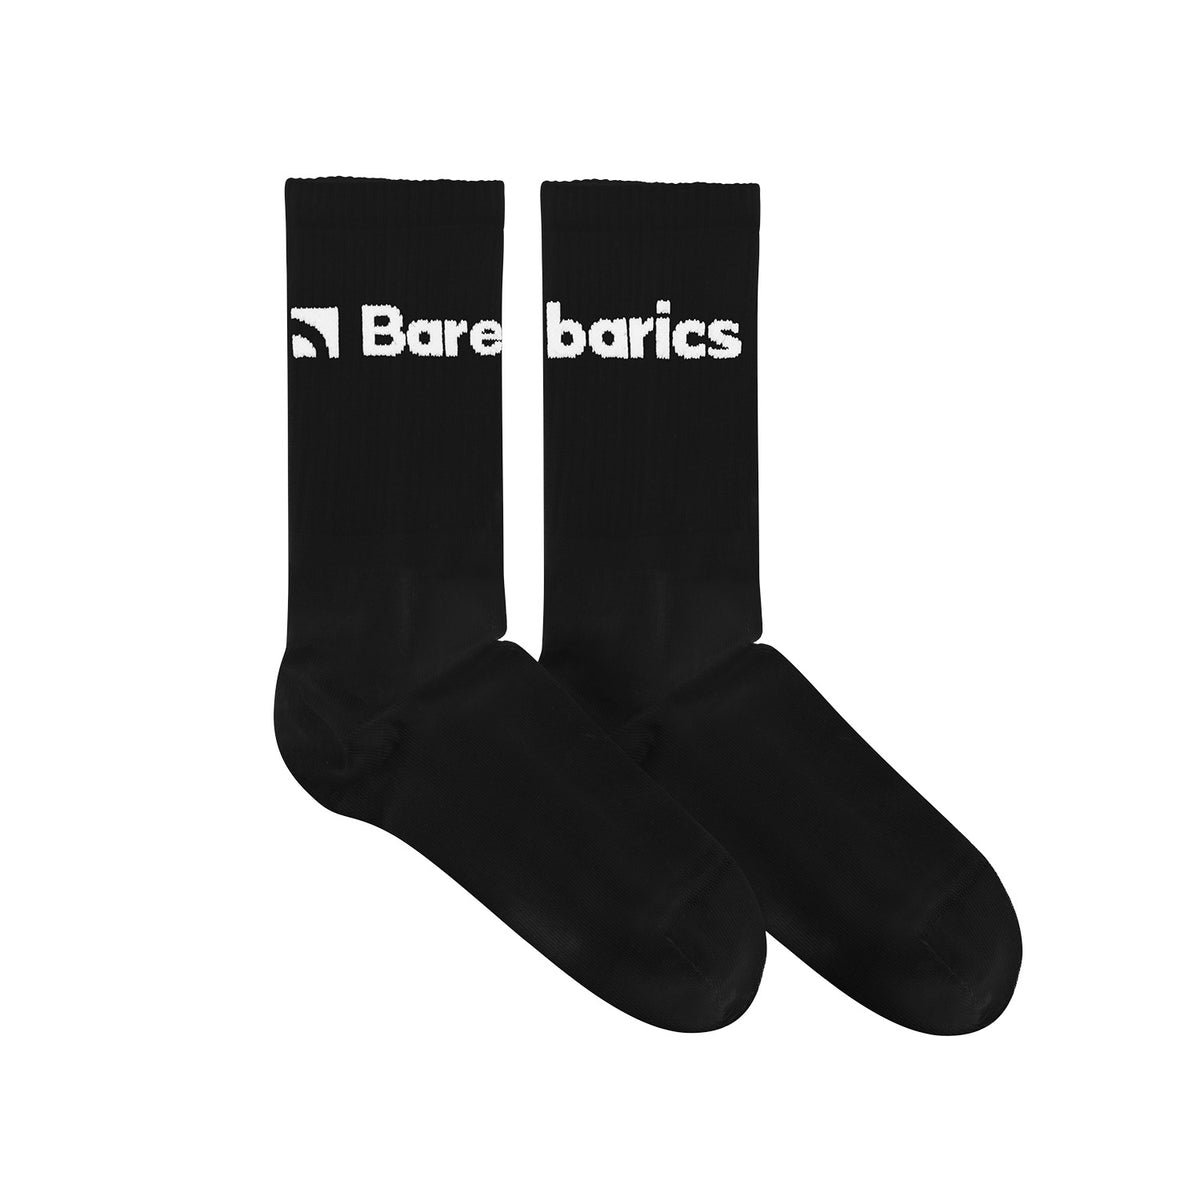 Barebarics - Barefoot Socks - Crew - Black - Big logo 1 OzBarefoot Australia